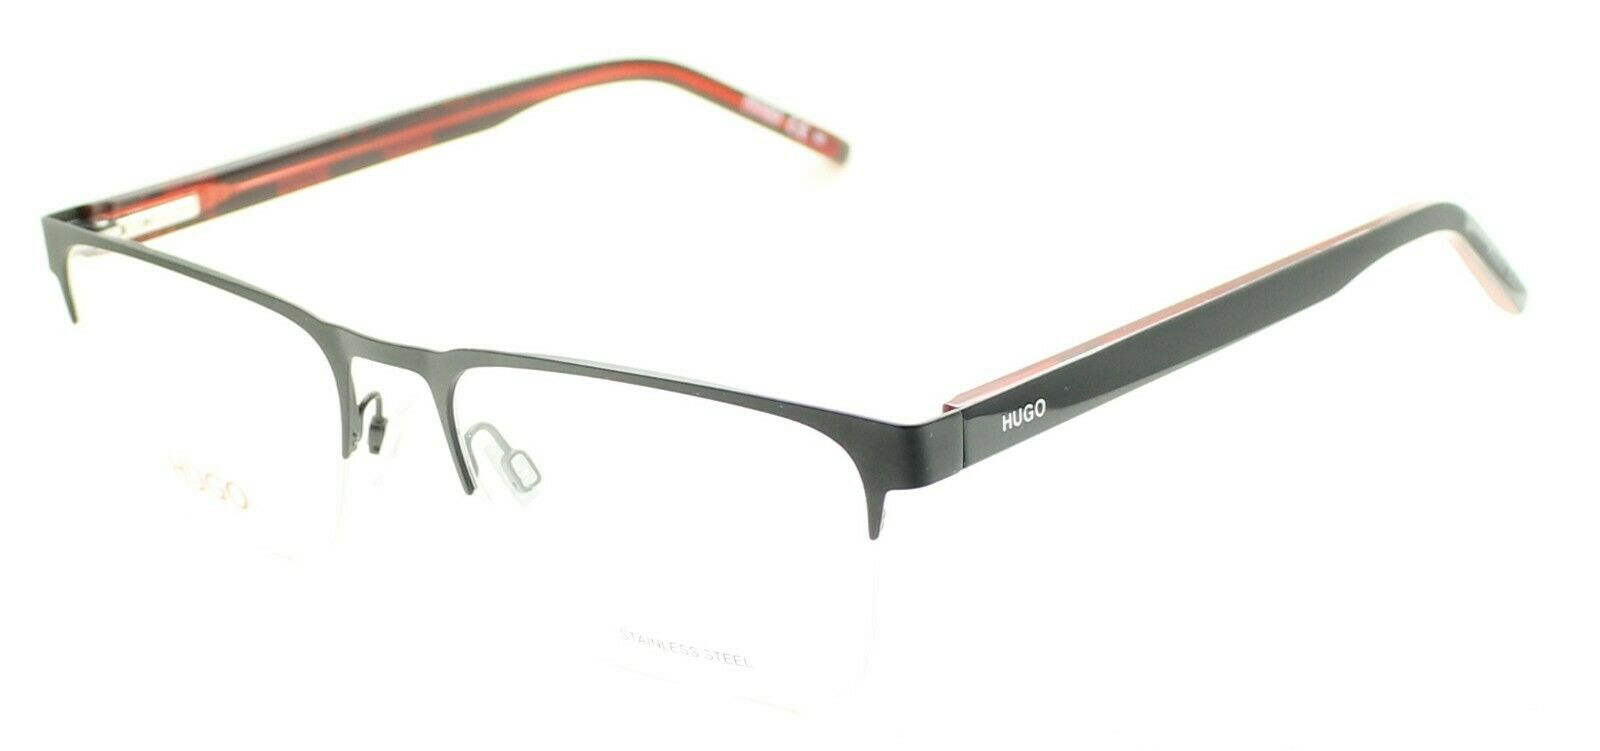 HUGO BOSS HG 1076 BLX 56mm Eyewear FRAMES Glasses RX Optical Eyeglasses - New